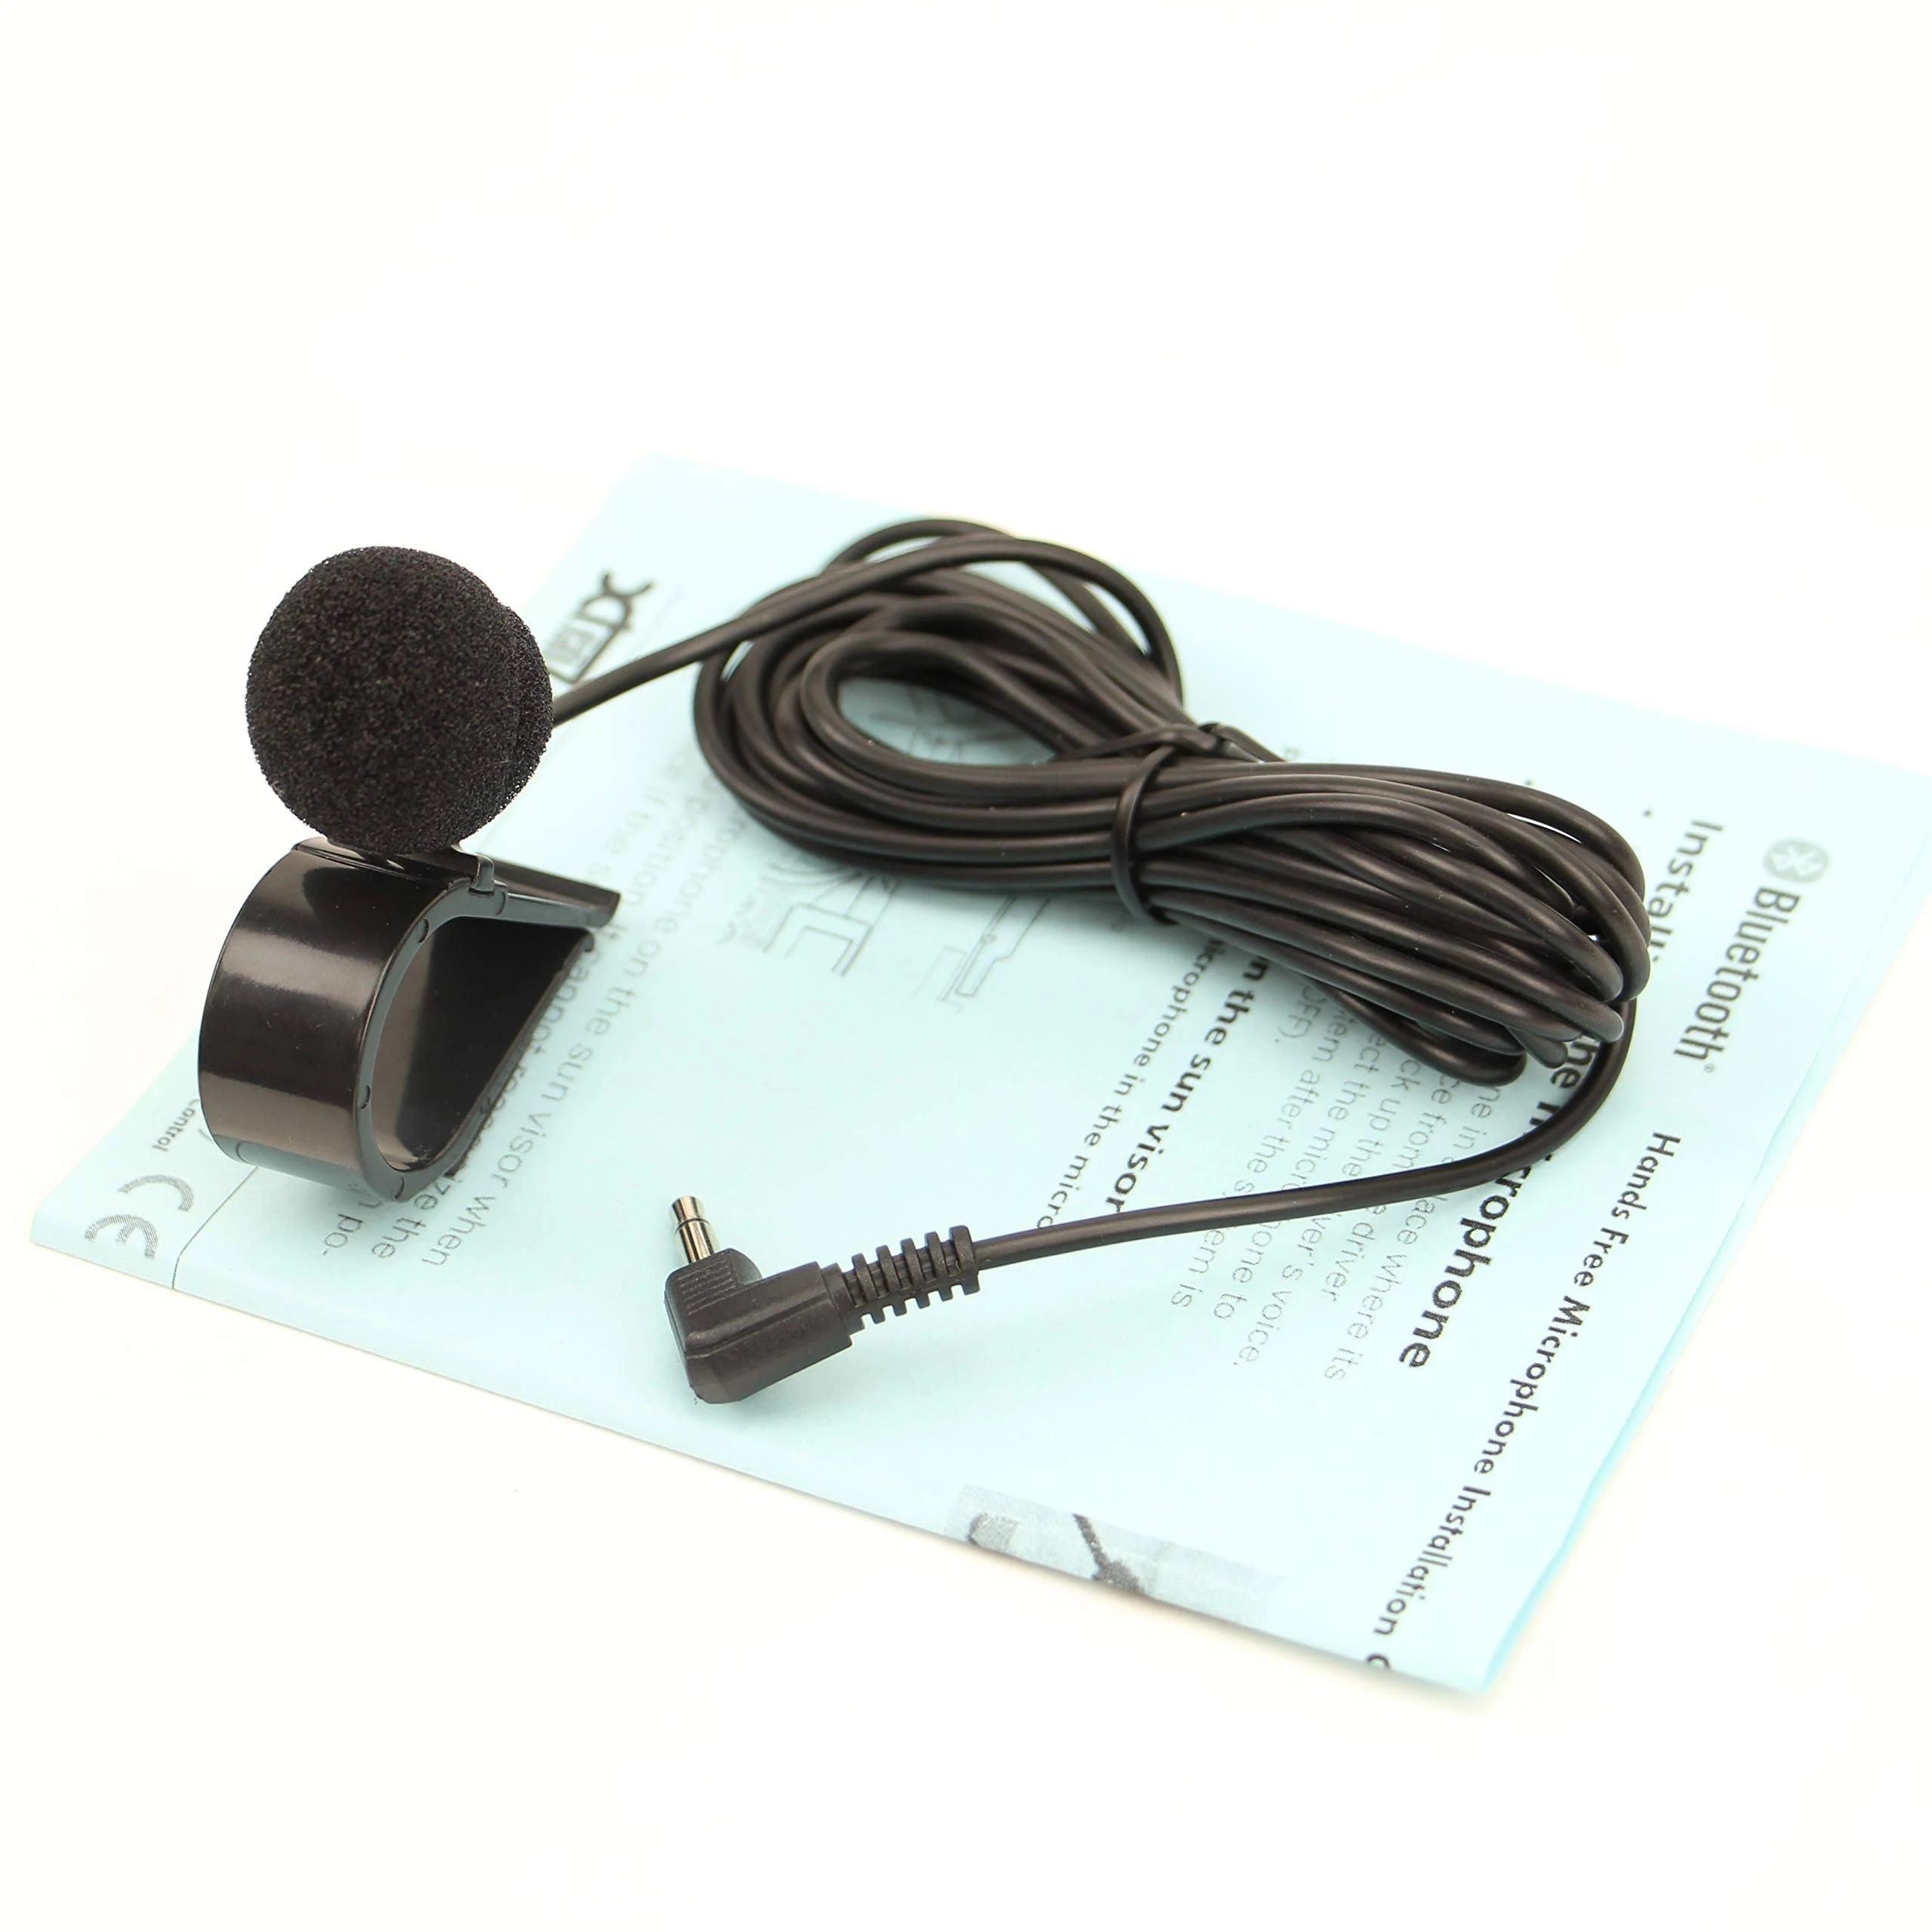 Xtenzi Premium Replacement Car Microphone for Jensen In-Dash Head Units | Image